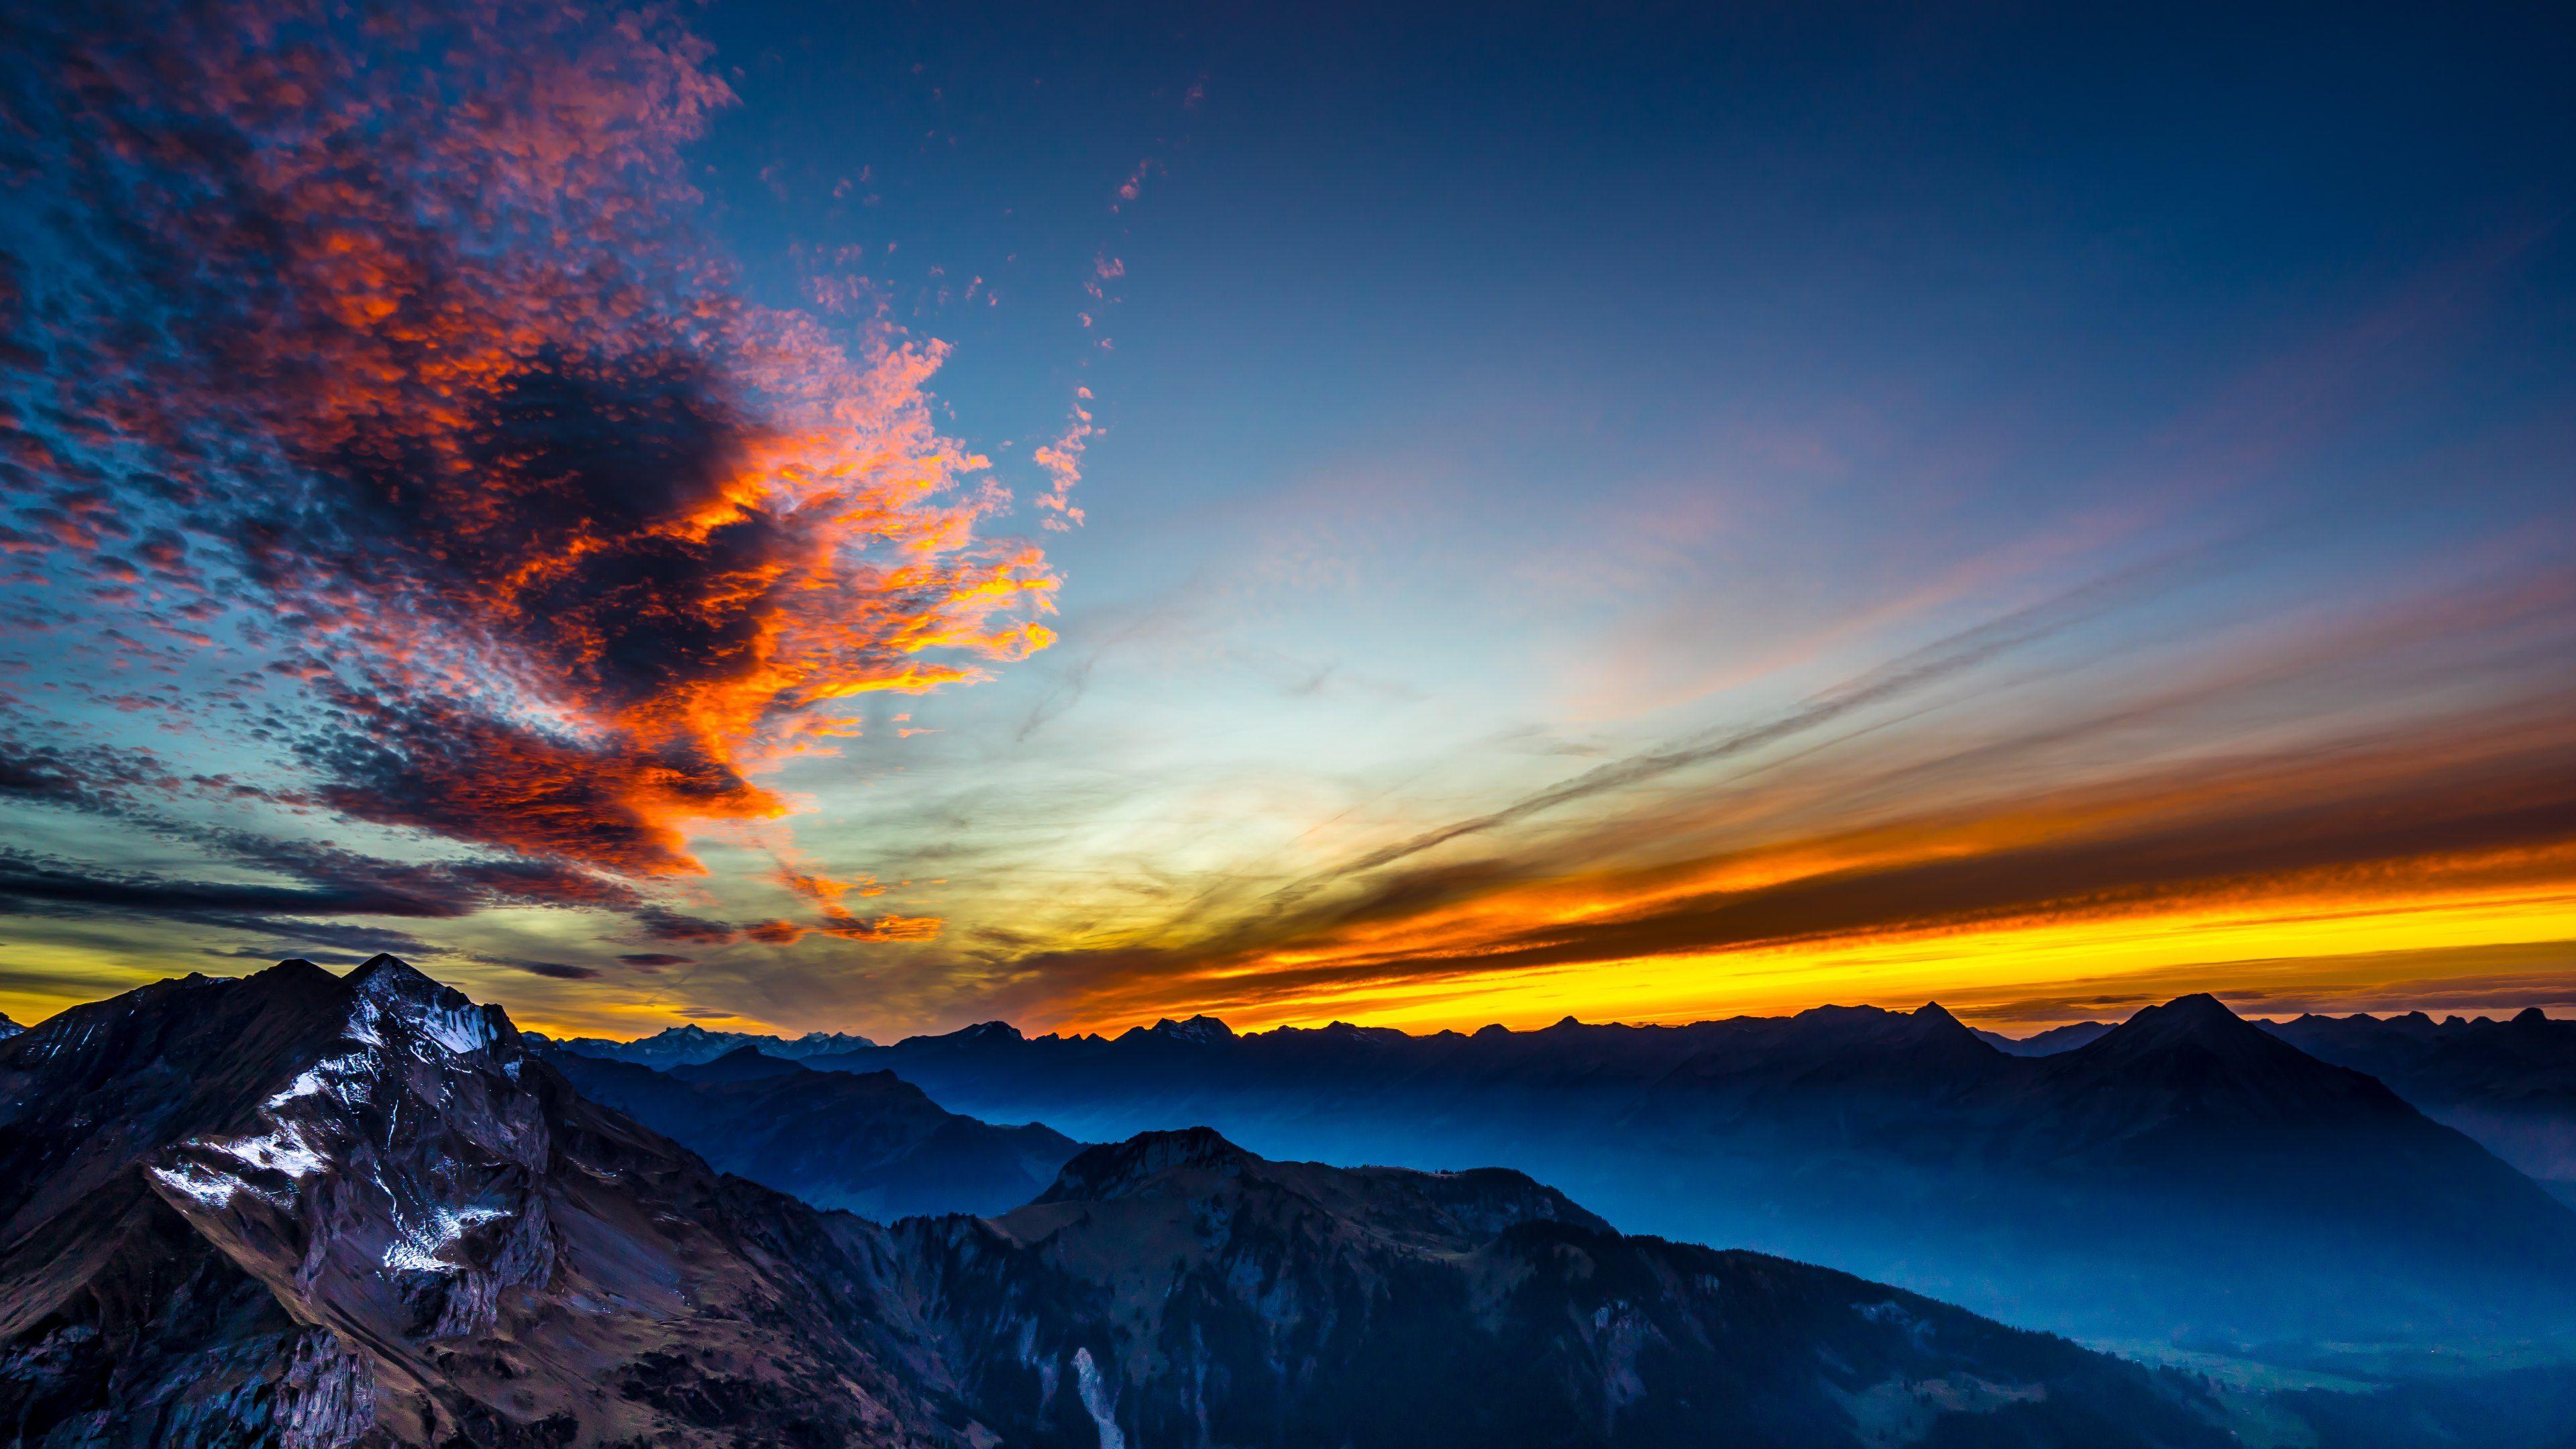 Mountain Sunset 4k Ultra HD Wallpaper. Background Image